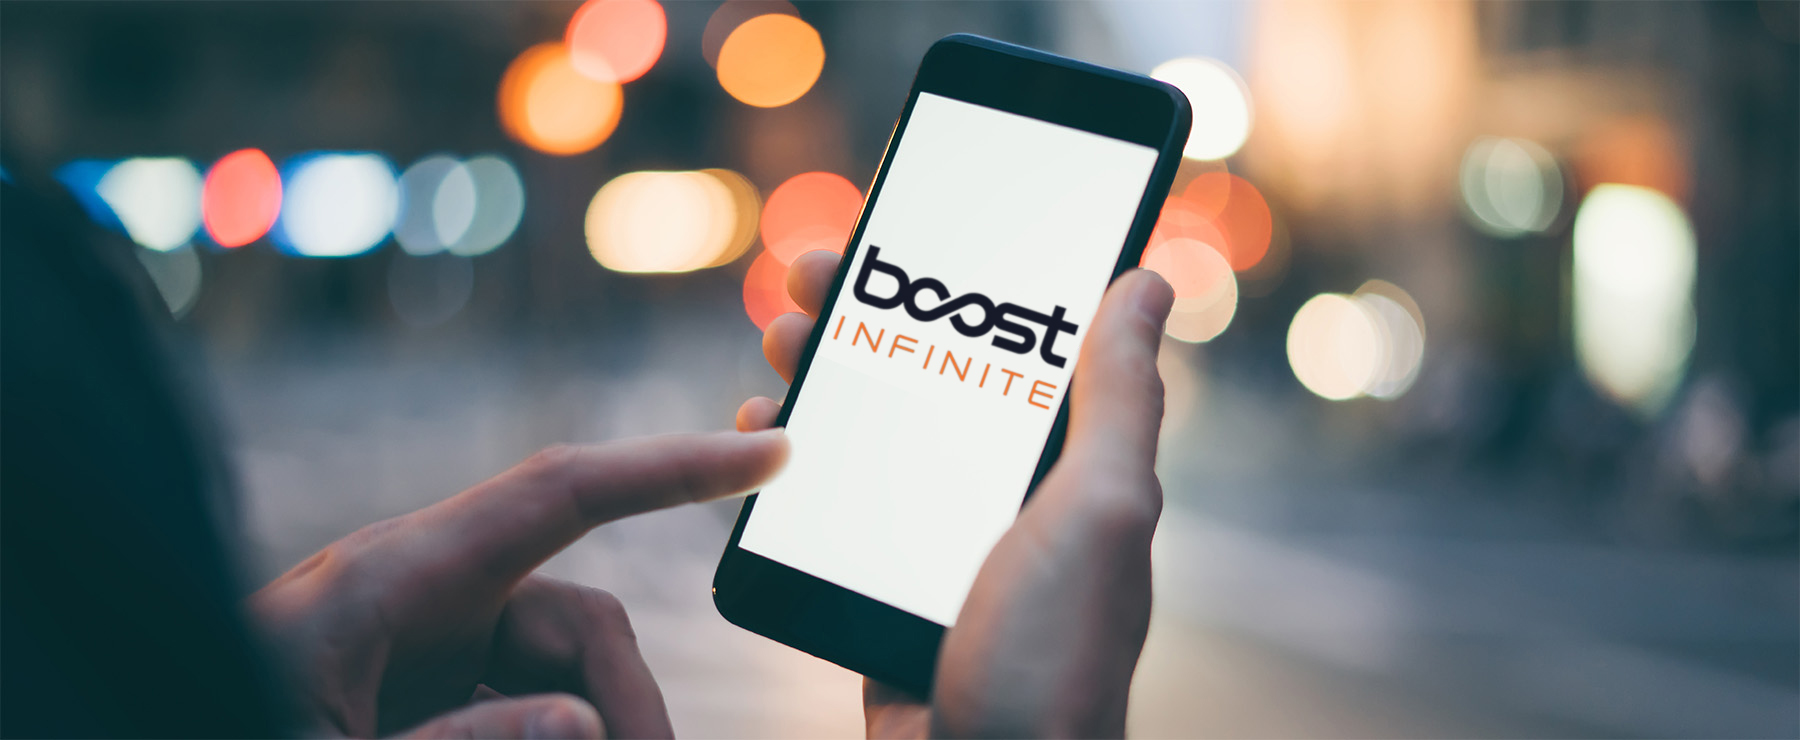 Smartphone on Boost Infinite 5G